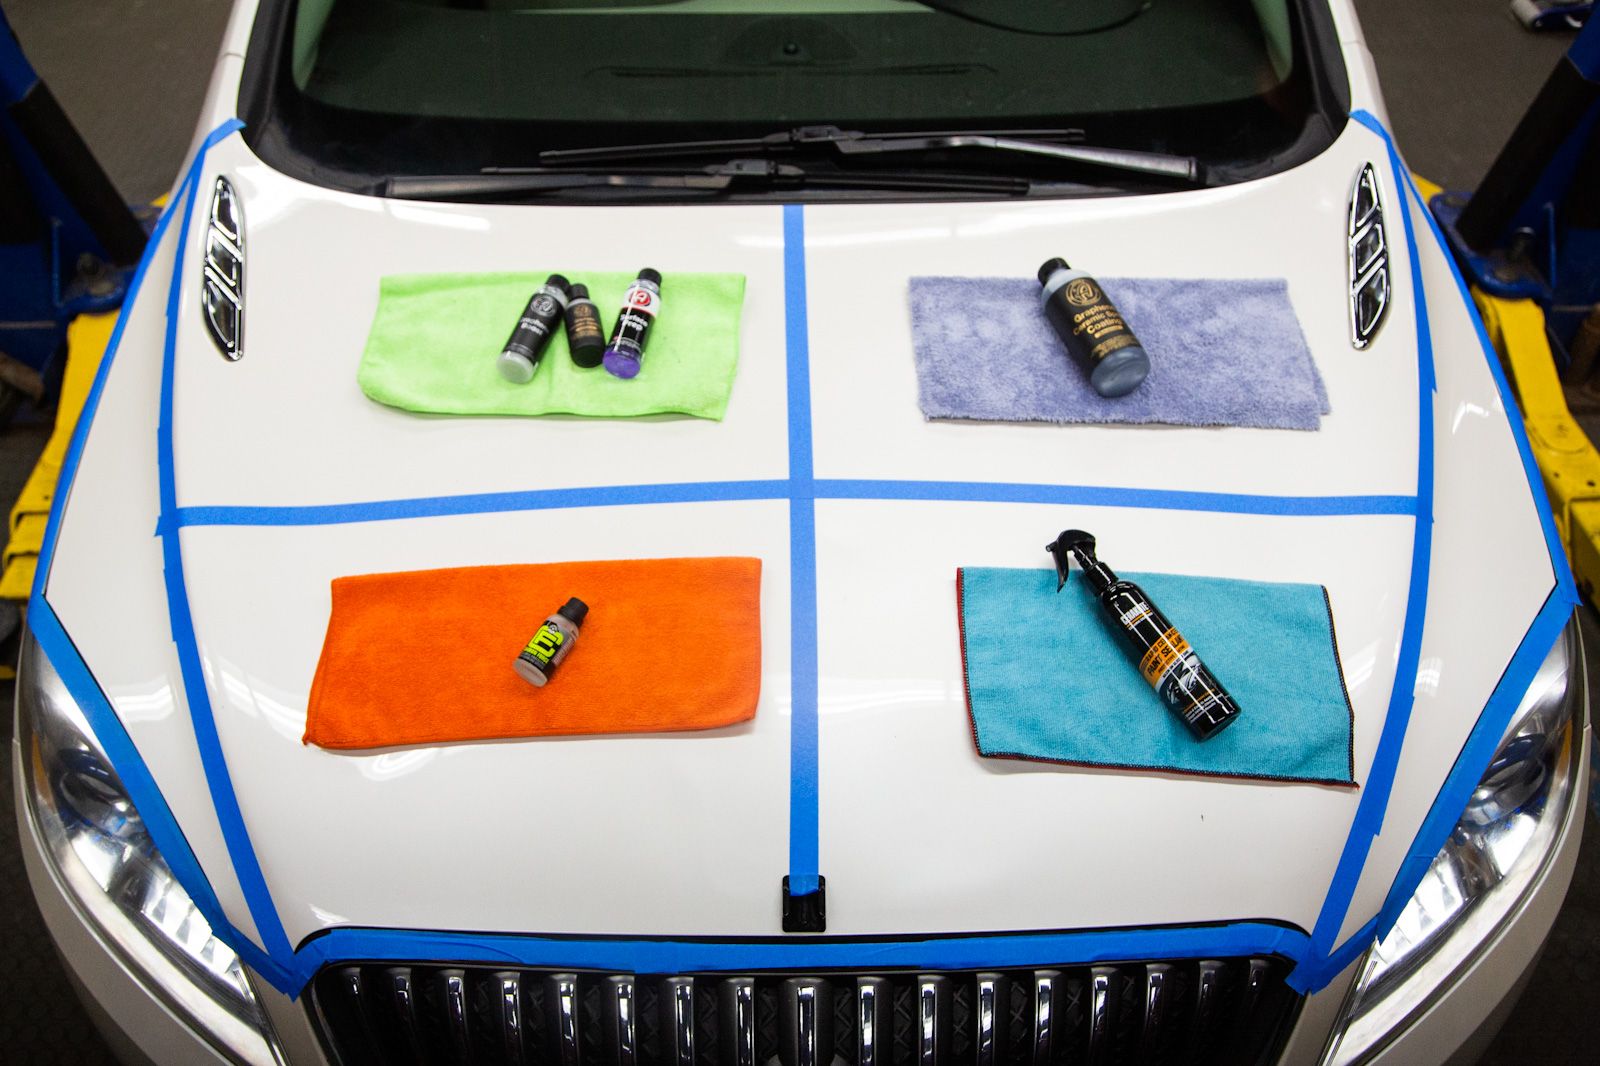 BEST Ceramic Spray for YOUR Car? - Ceramic Spray Comparison! // Car Care  Product Review 